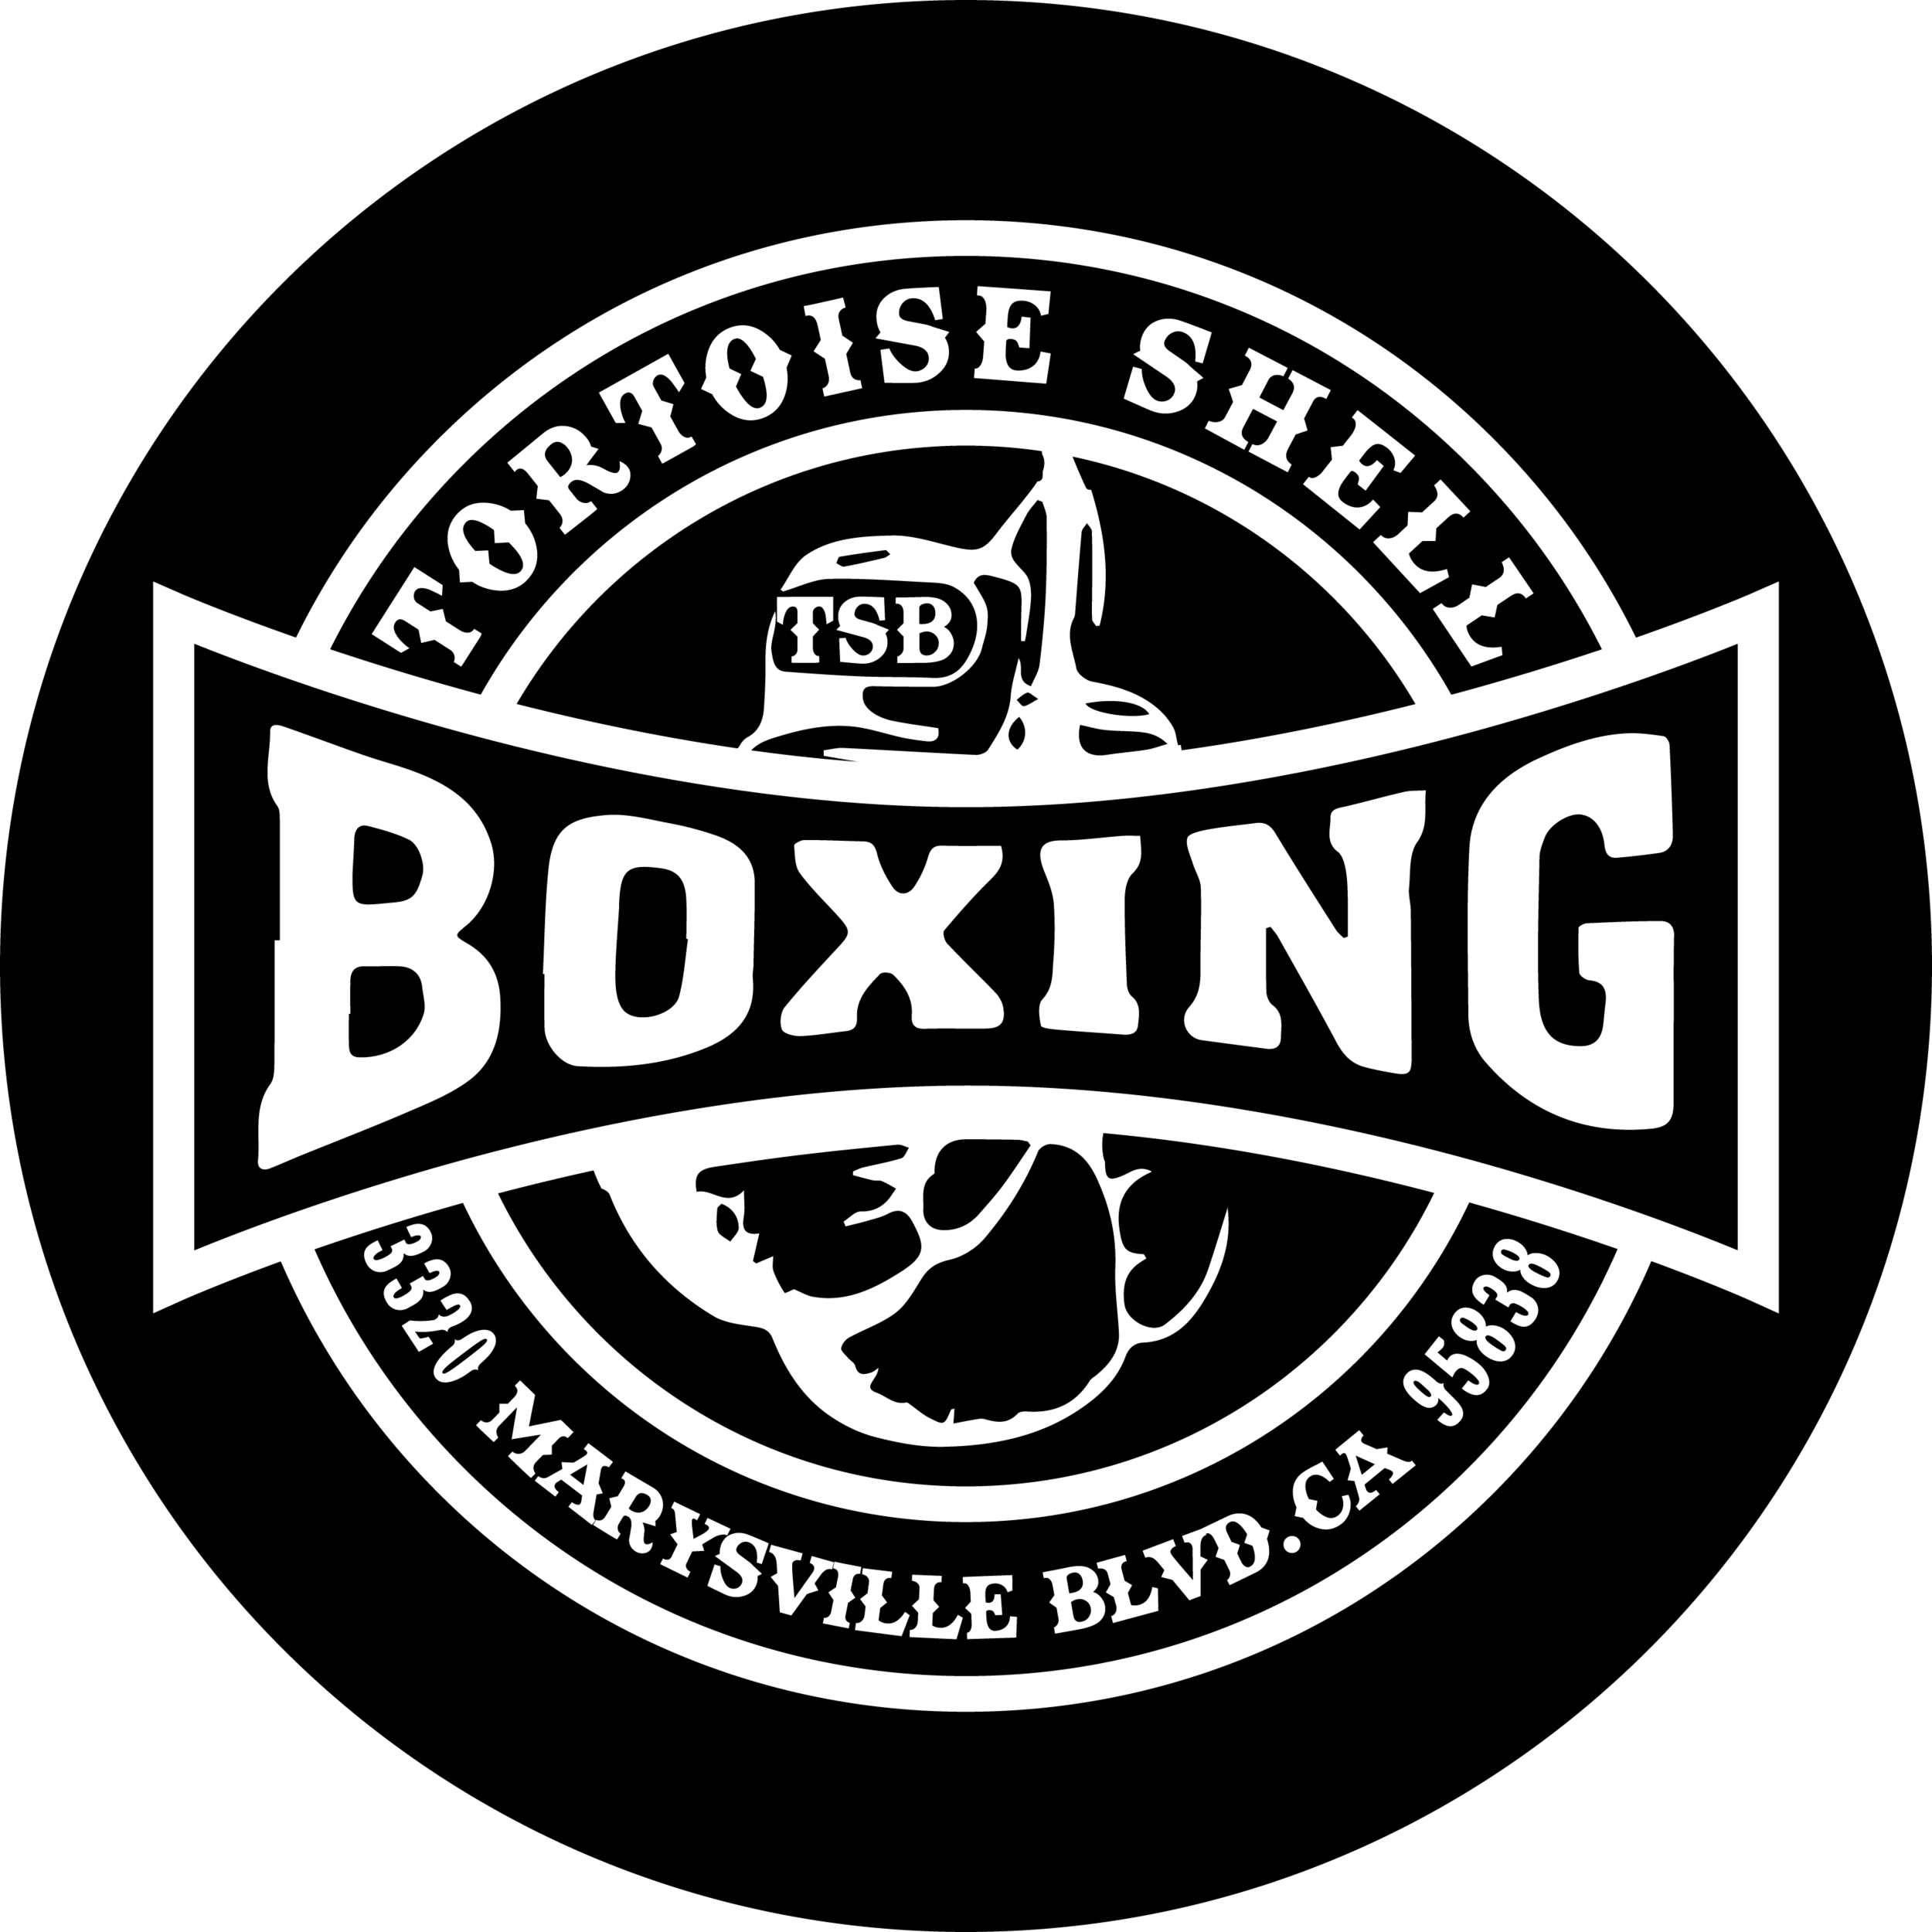 Tortoise Shell Boxing Gym